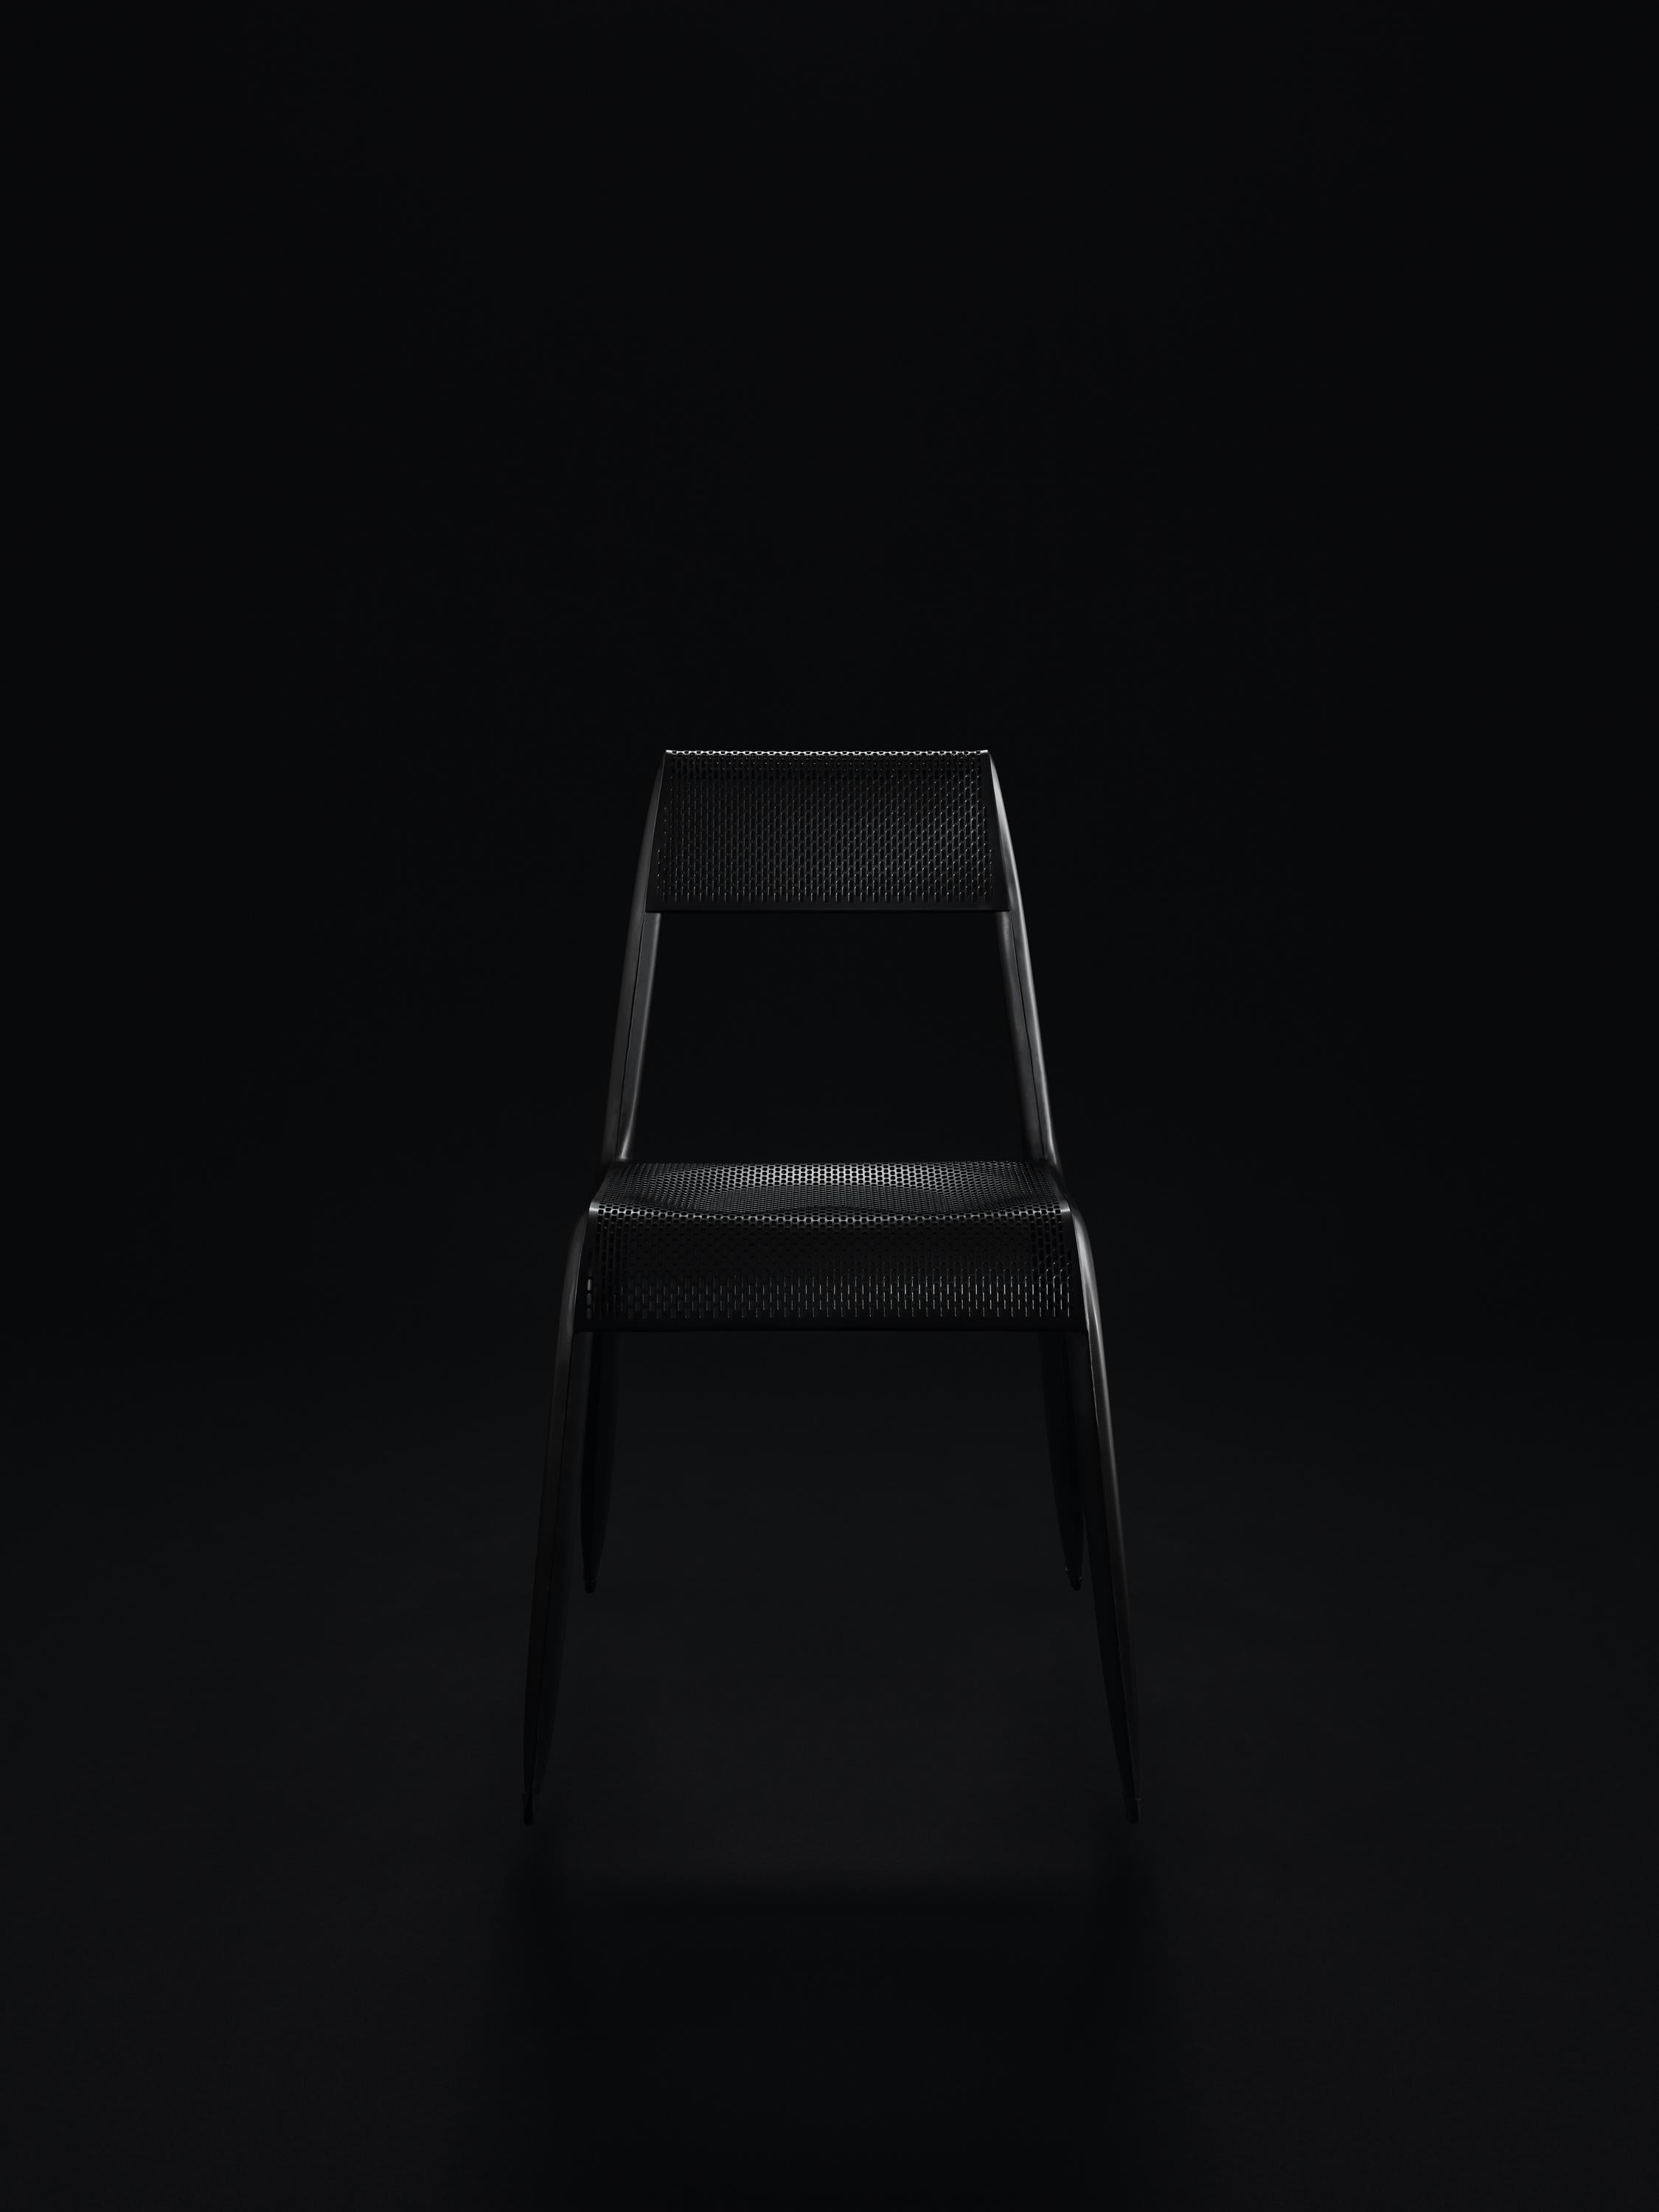 Ultraleggera Anodic Black Chair by Zieta For Sale 4